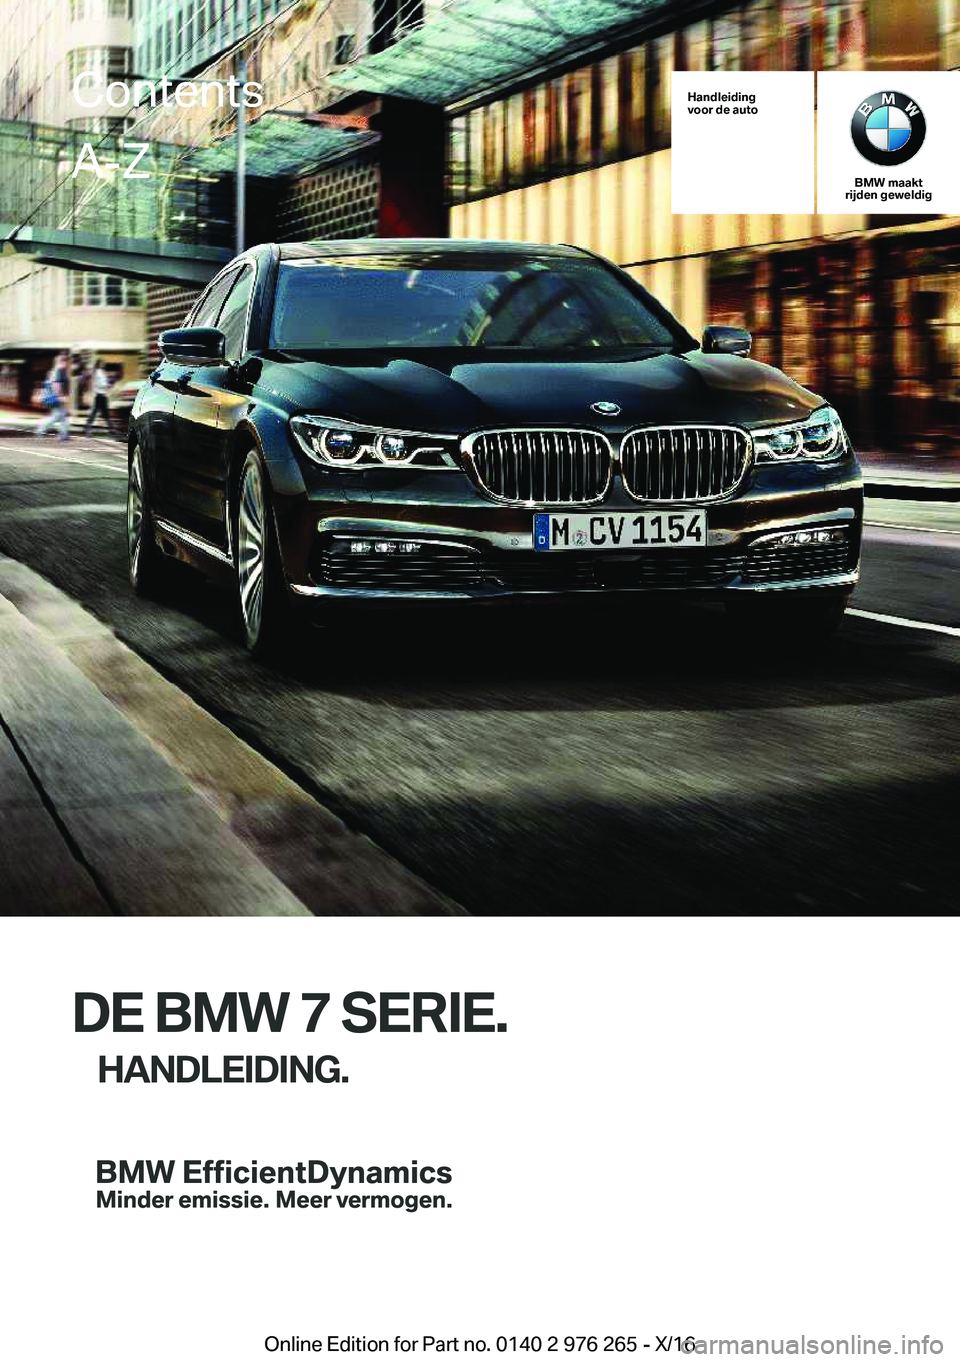 BMW 7 SERIES 2017  Instructieboekjes (in Dutch) �H�a�n�d�l�e�i�d�i�n�g
�v�o�o�r��d�e��a�u�t�o
�B�M�W��m�a�a�k�t
�r�i�j�d�e�n��g�e�w�e�l�d�i�g
�D�E��B�M�W��7��S�E�R�I�E�.
�H�A�N�D�L�E�I�D�I�N�G�.
�C�o�n�t�e�n�t�s�A�-�Z
�O�n�l�i�n�e� �E�d�i�t�